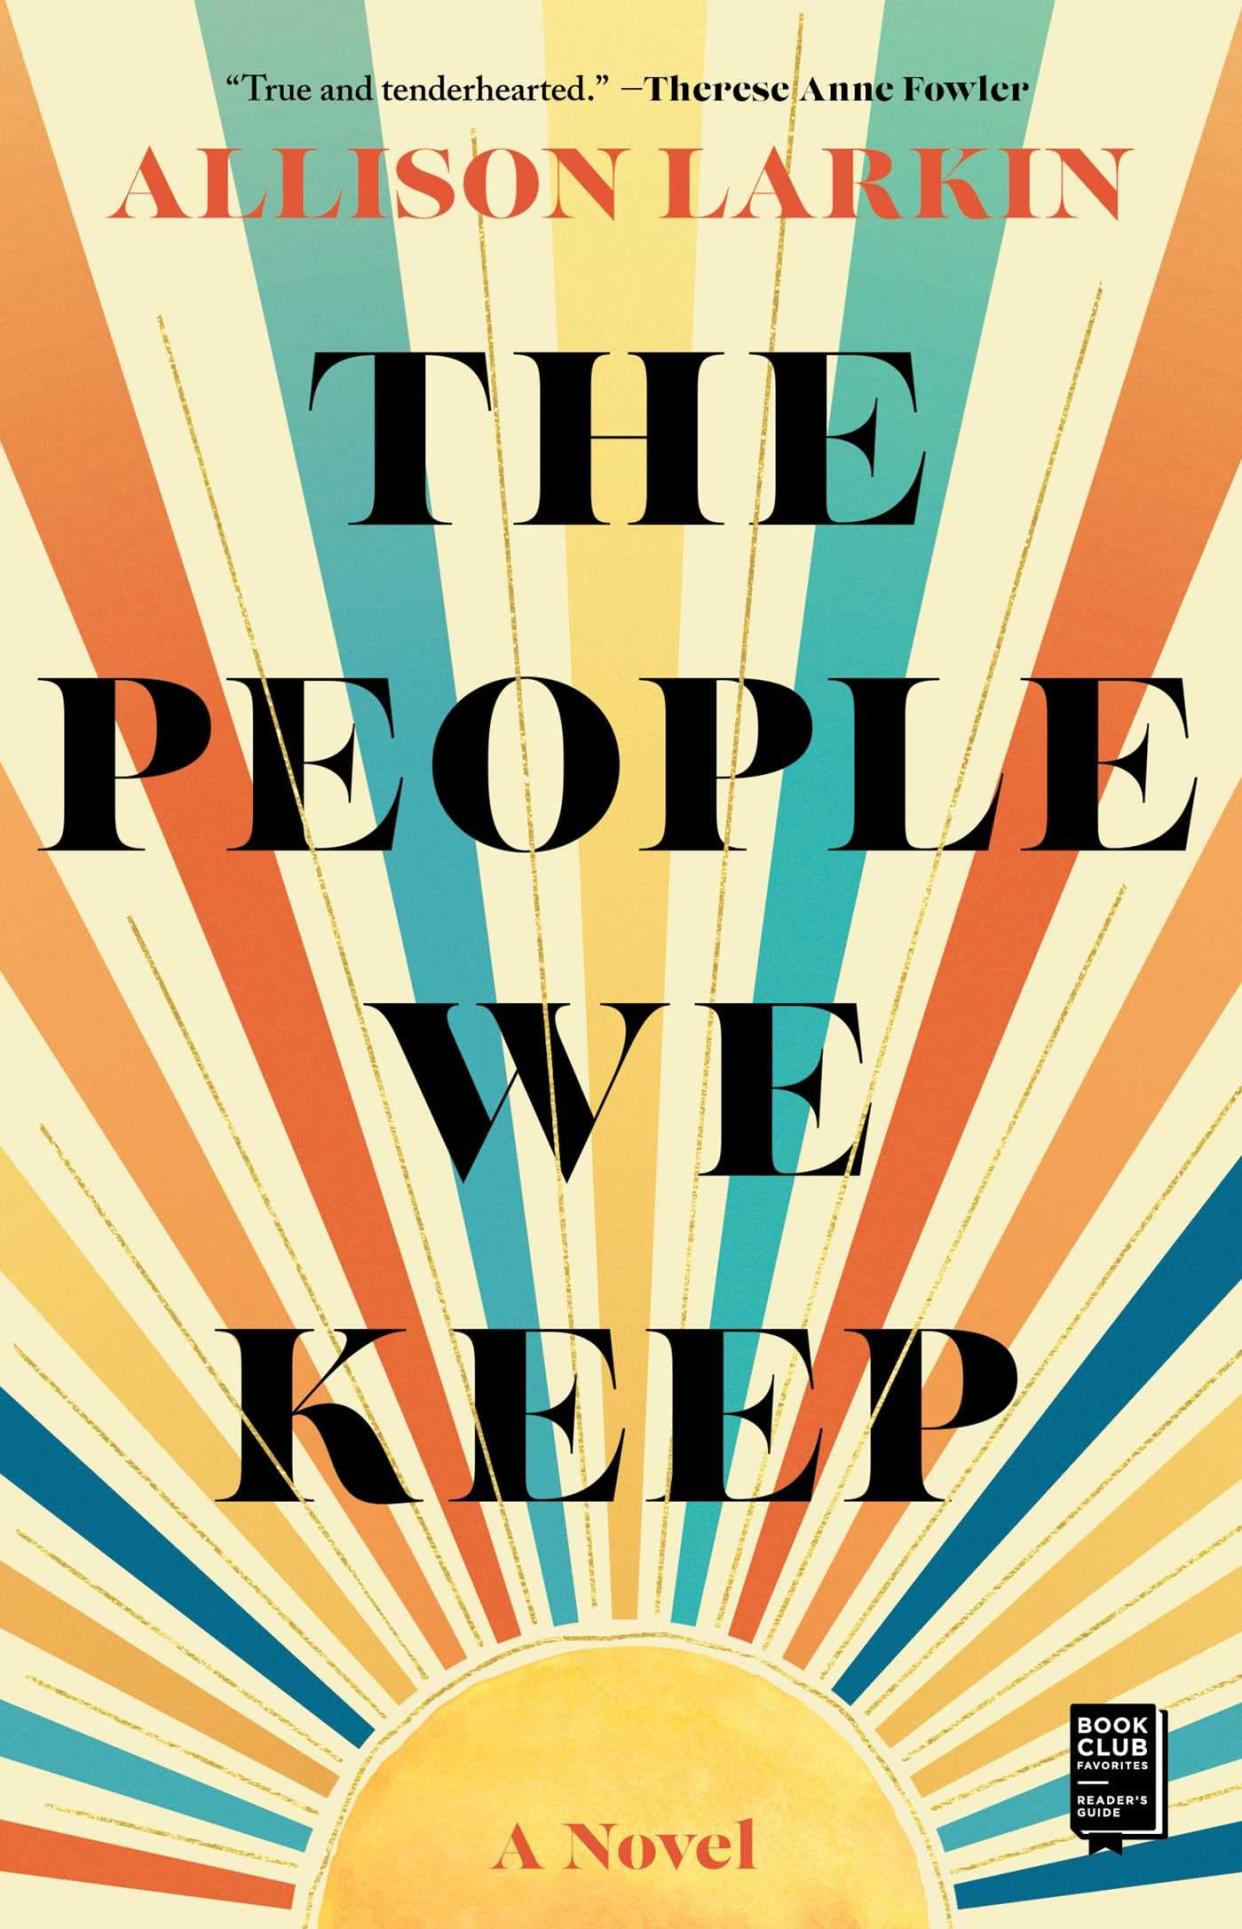 "The People We Keep"